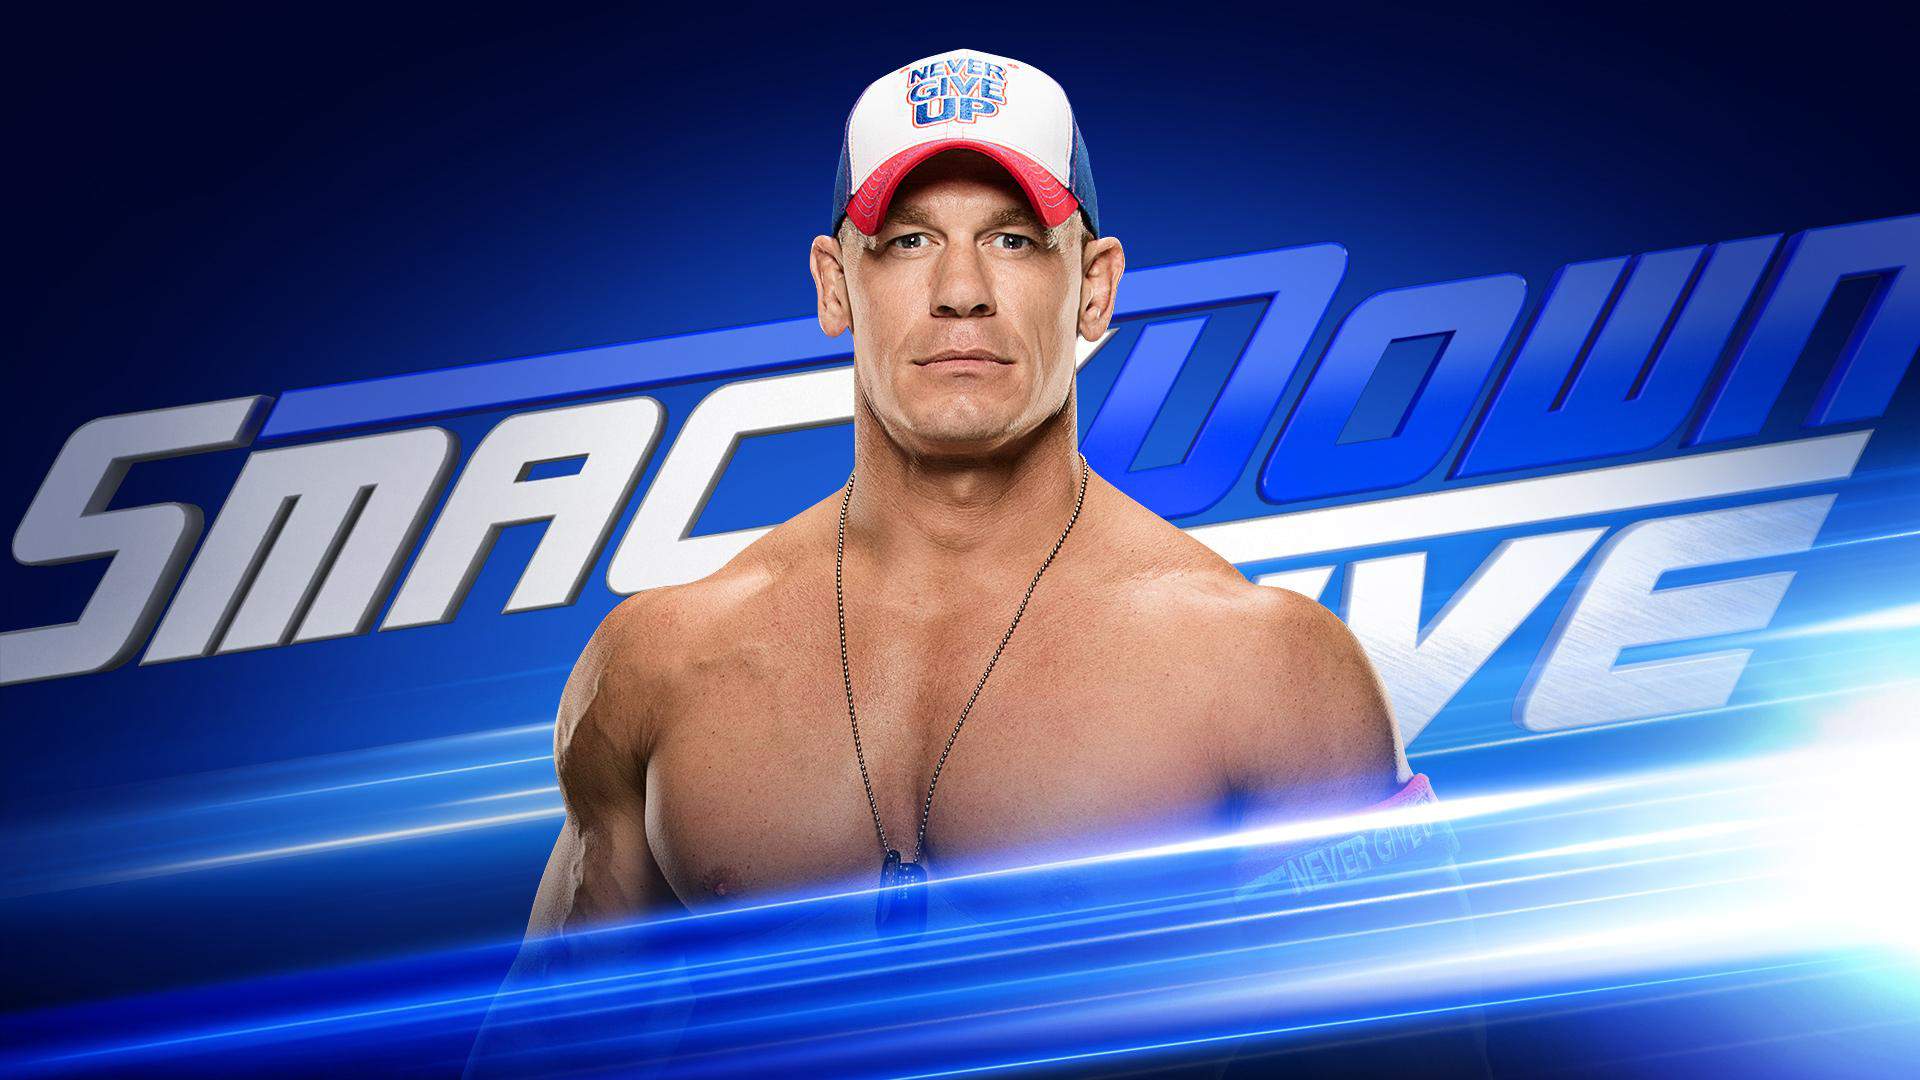 John Cena Wallpaper Hd - Wwe Smackdown Daniel Bryan - HD Wallpaper 